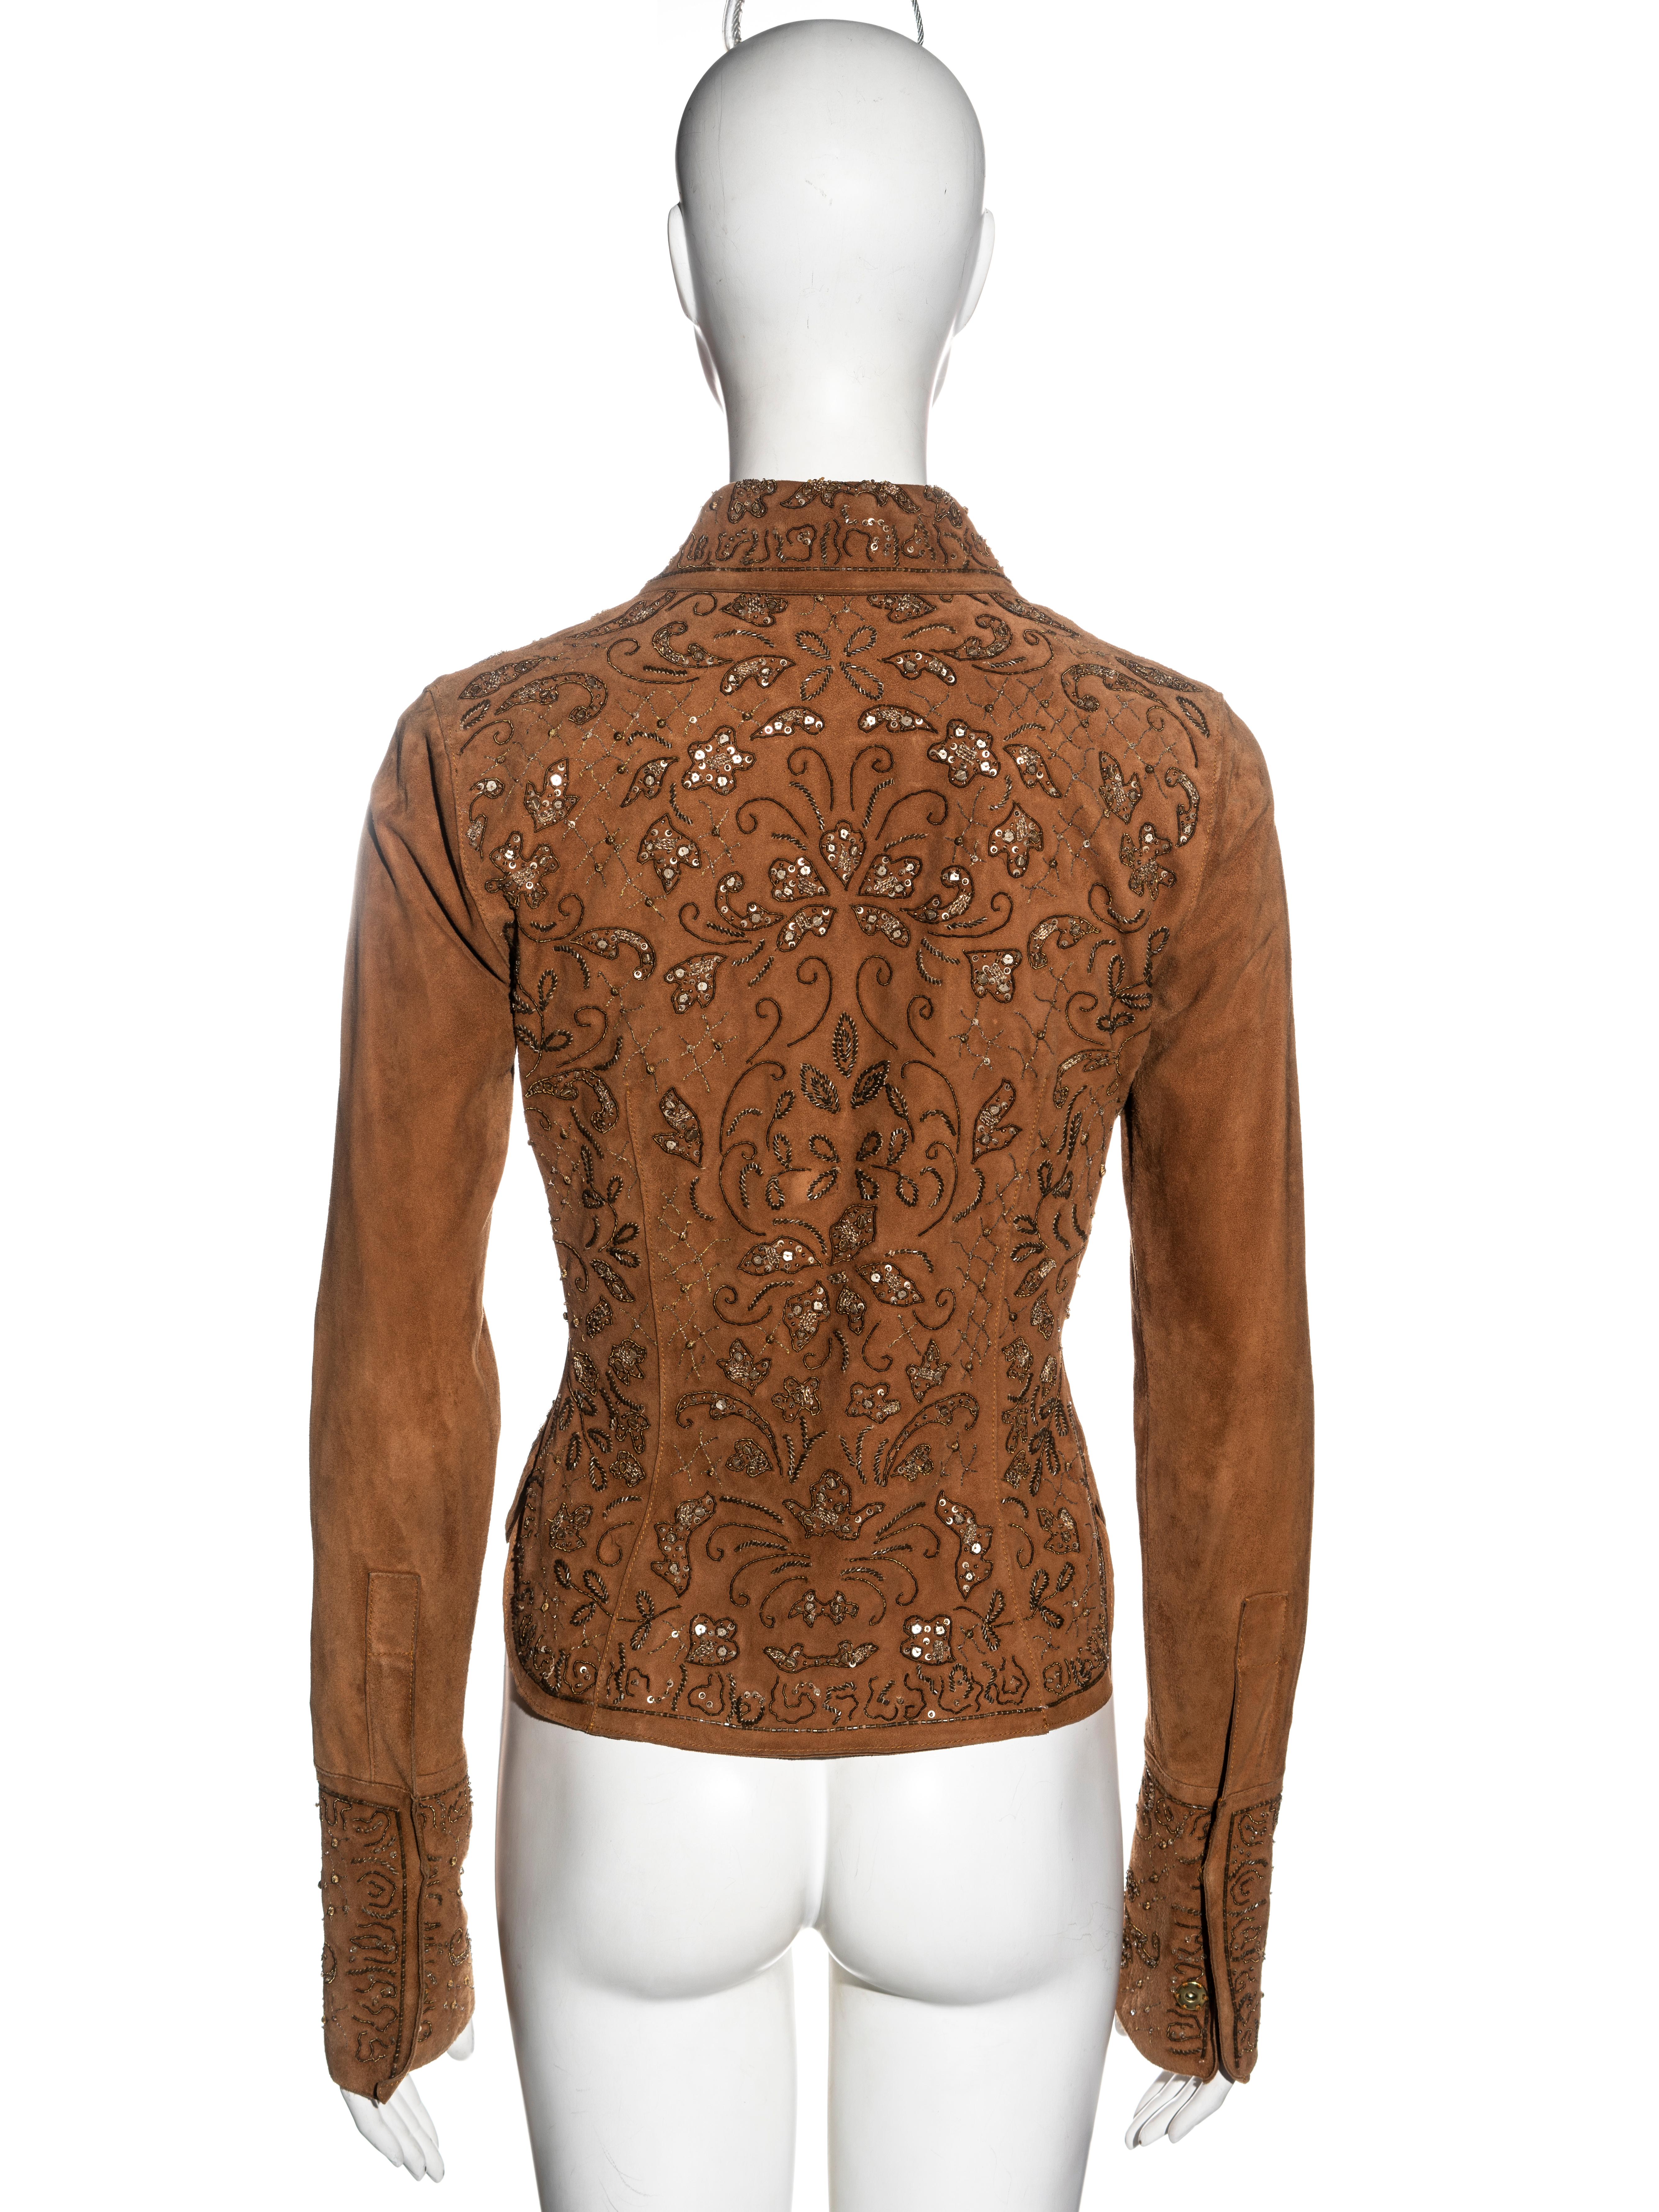 Dolce & Gabbana brown goat suede embellished shirt, ss 2001 For Sale 4